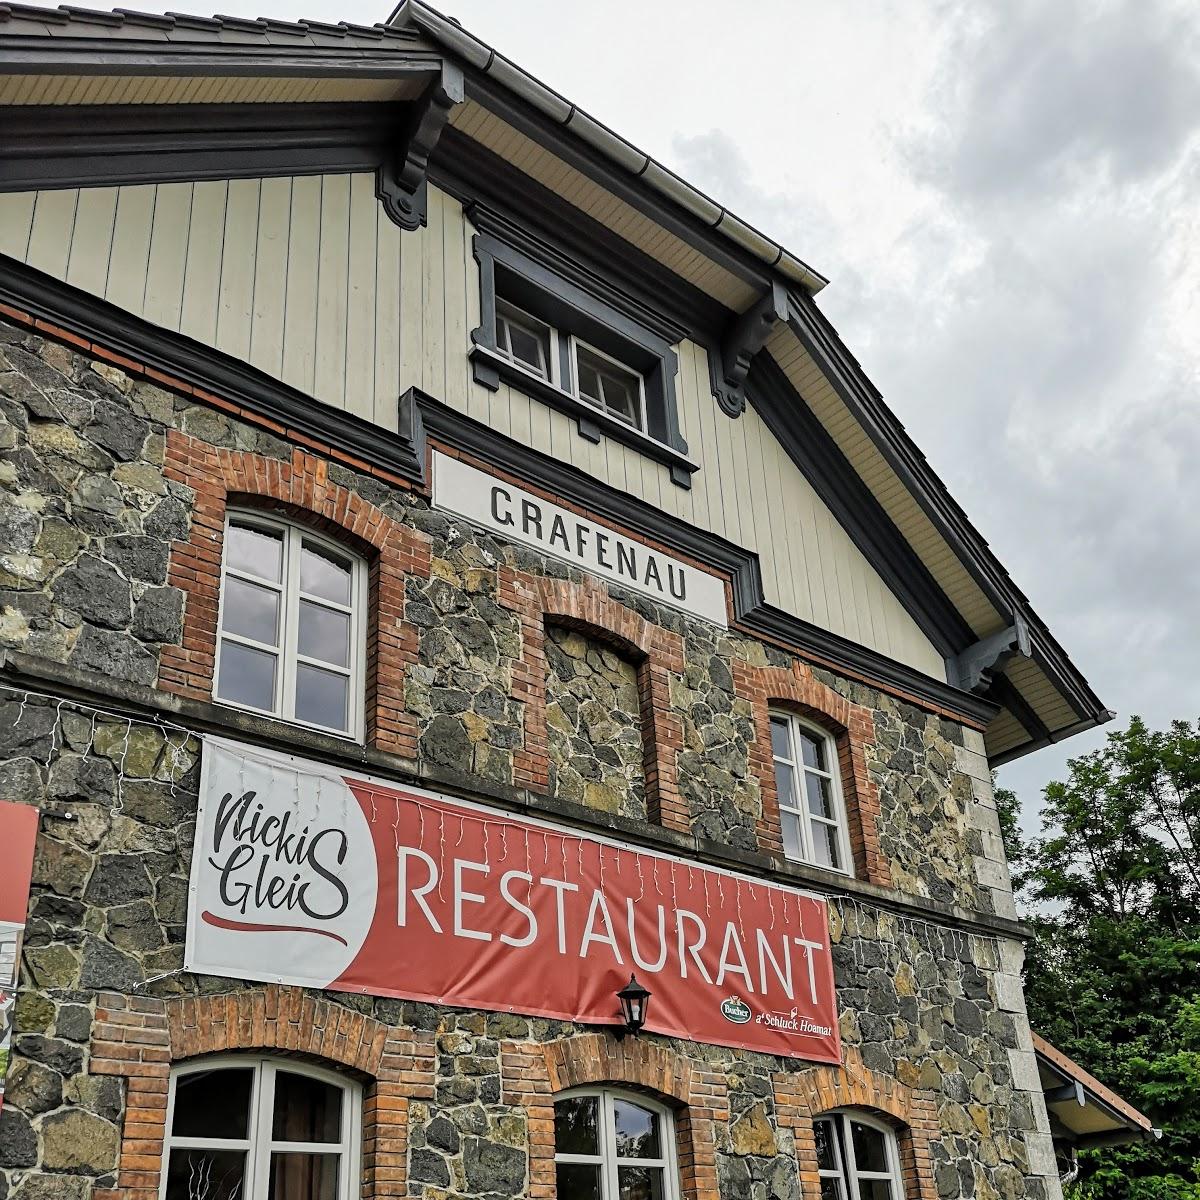 Restaurant "Nickis Gleis" in  Grafenau